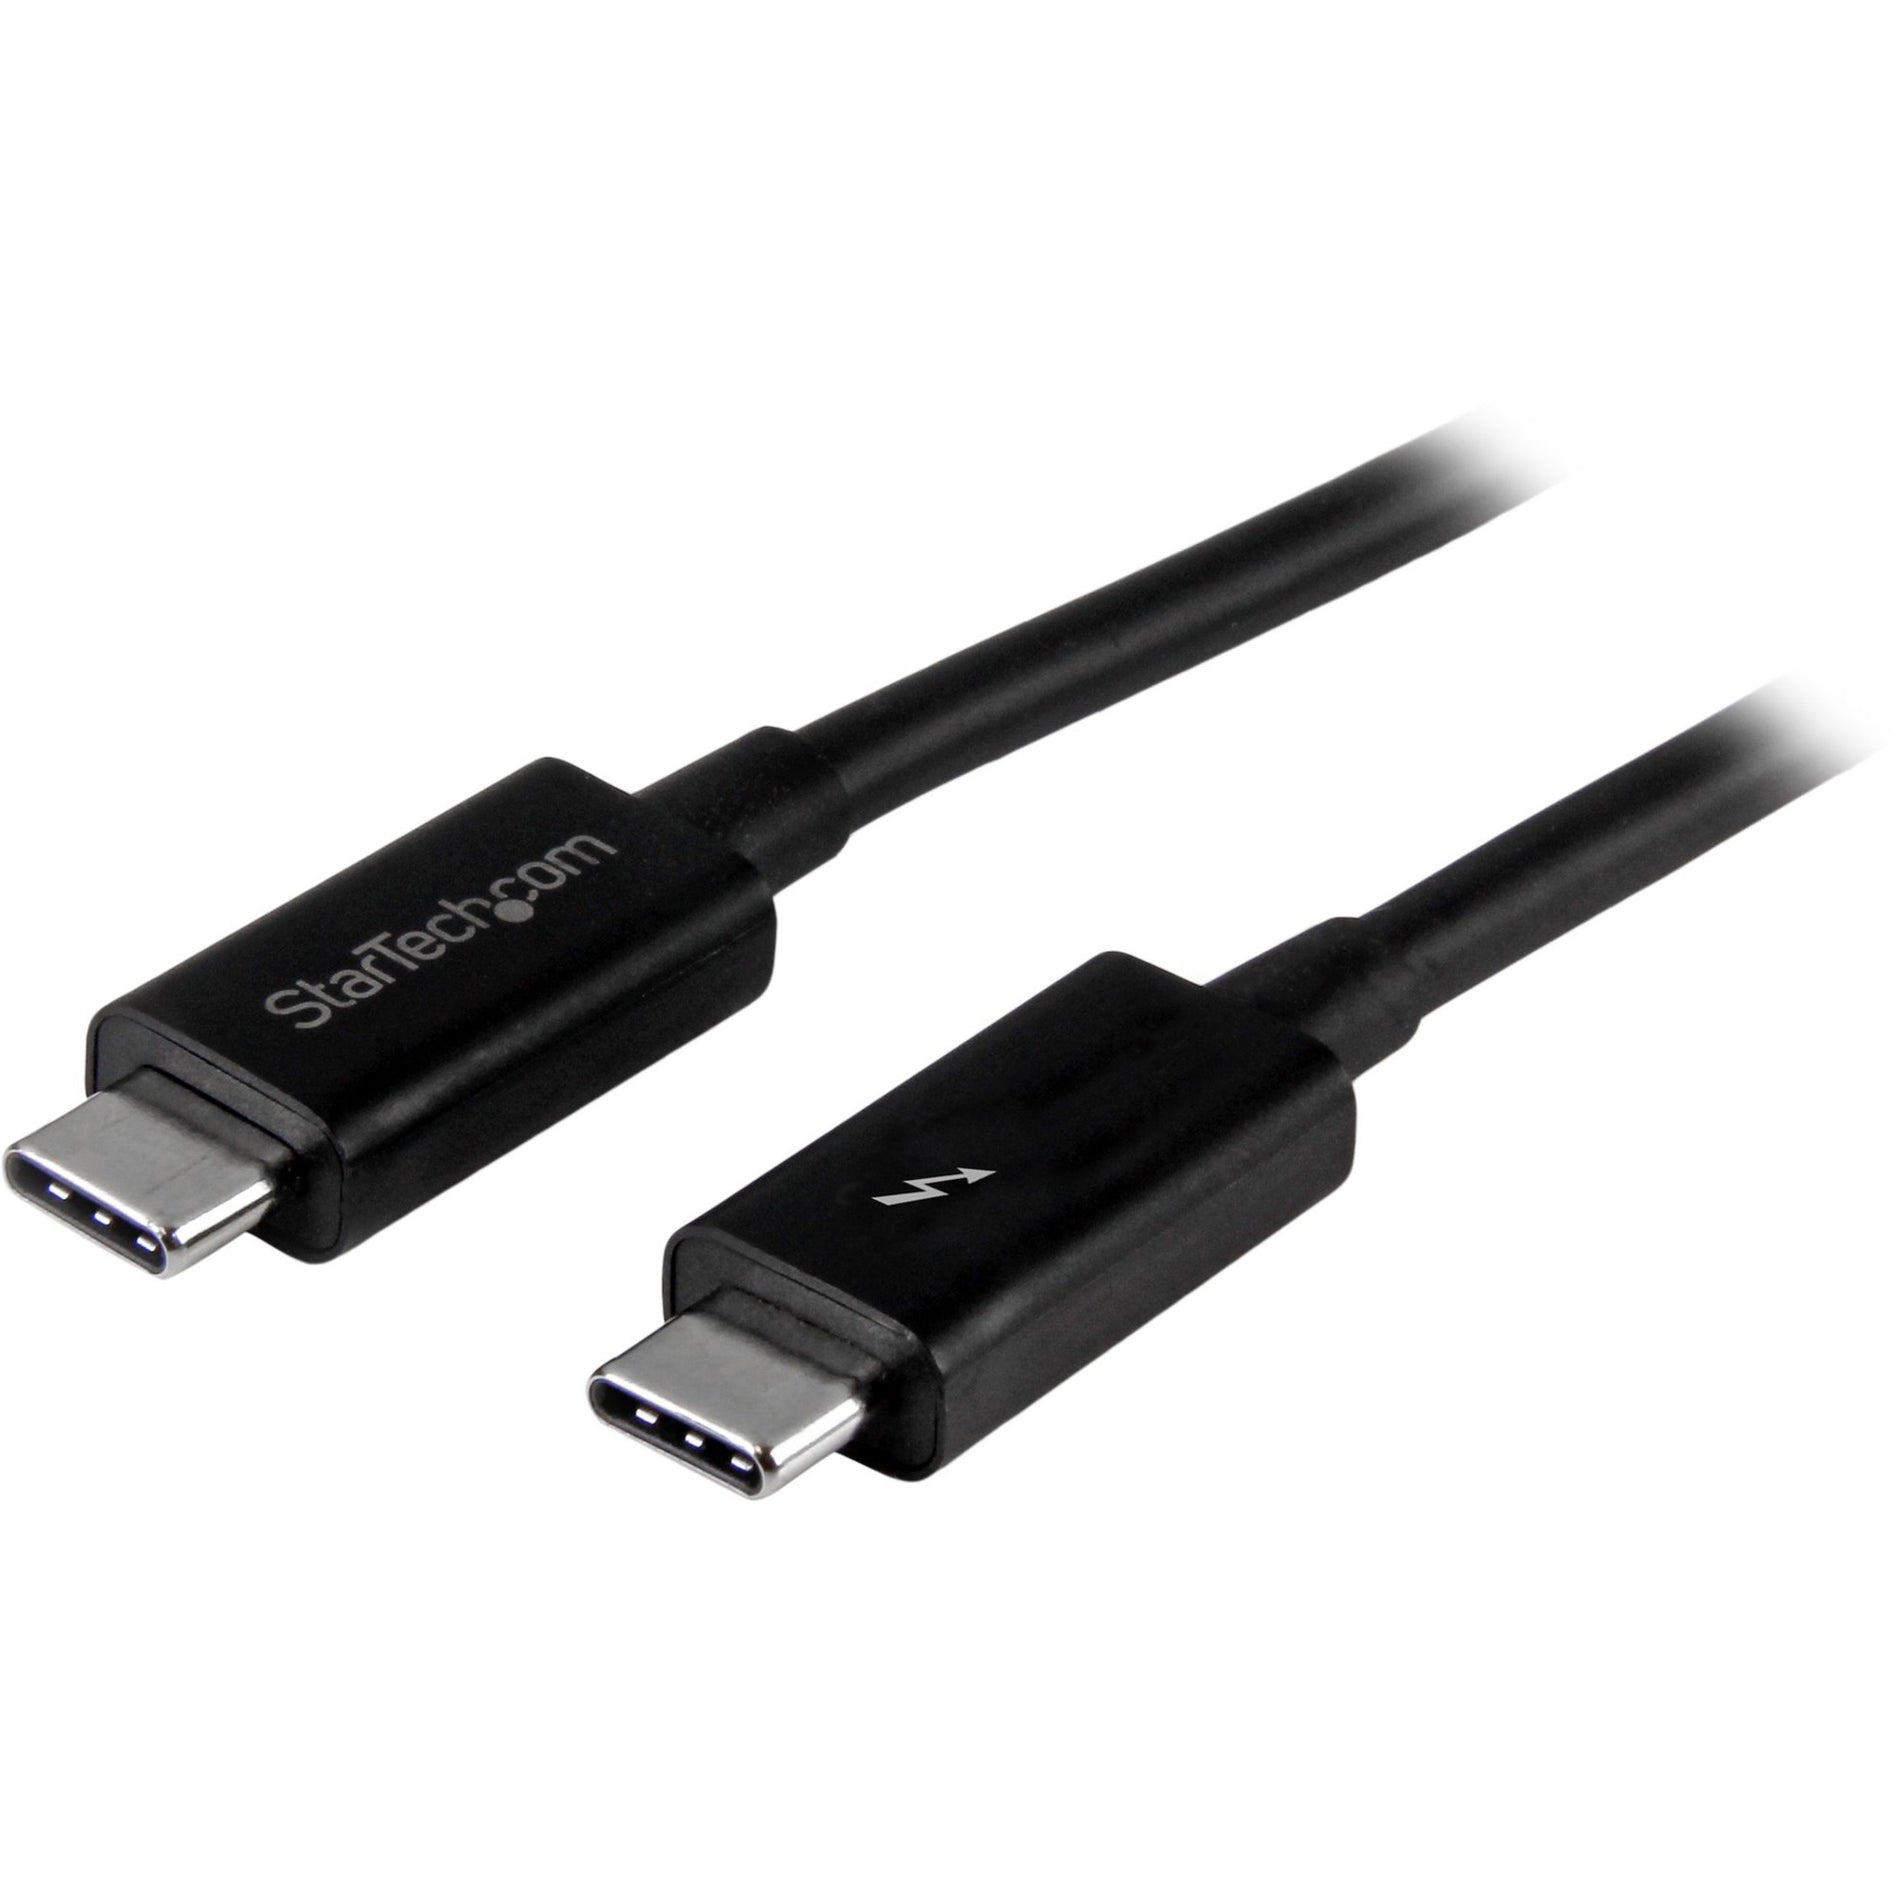 StarTech.com TBLT3MM1M 1m Thunderbolt 3 (20Gbps) USB-C Cable, Thunderbolt, USB, and DisplayPort Compatible